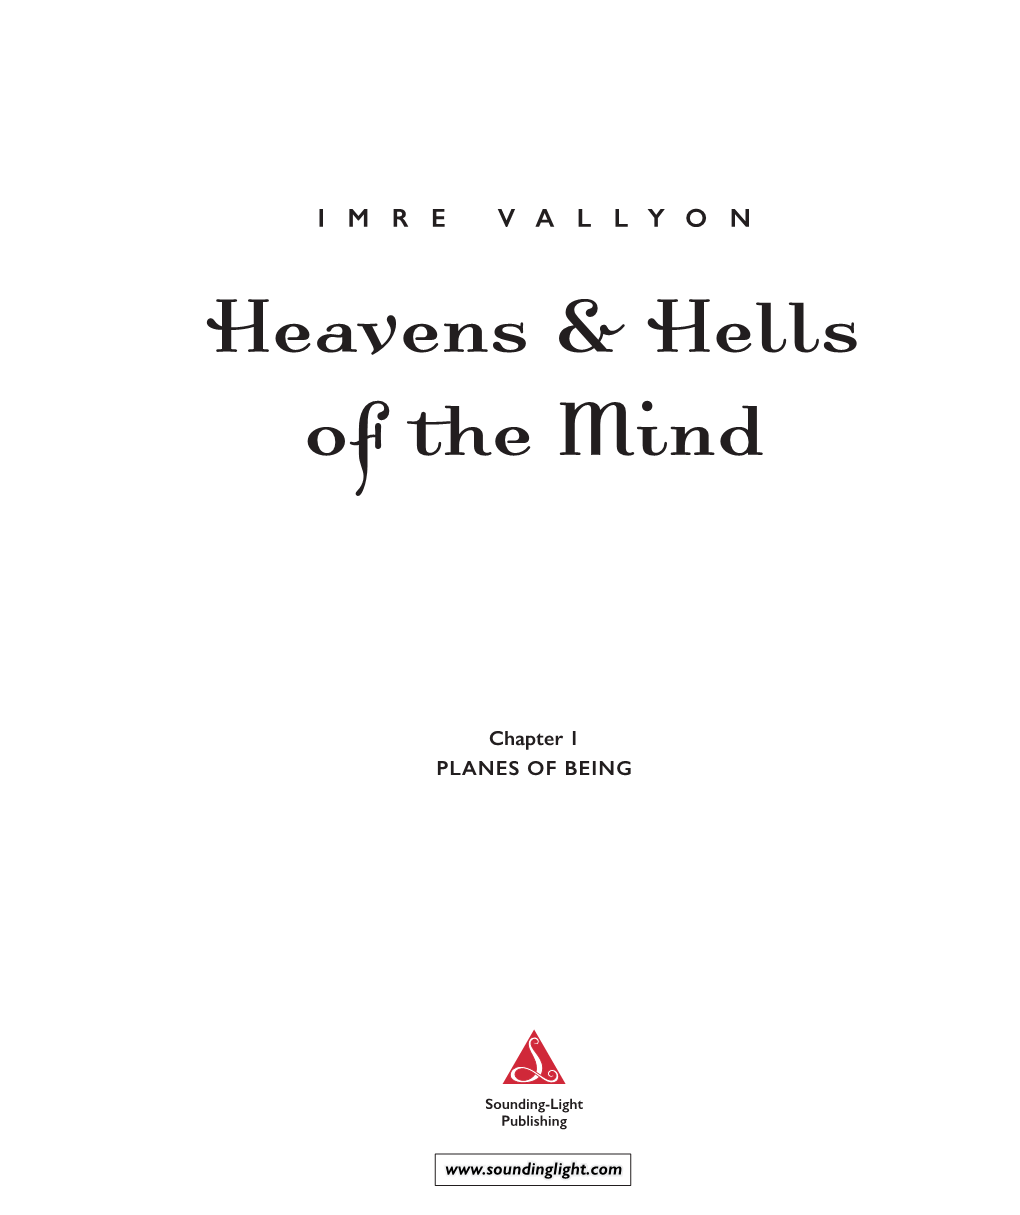 Heavens & Hells of the Mind